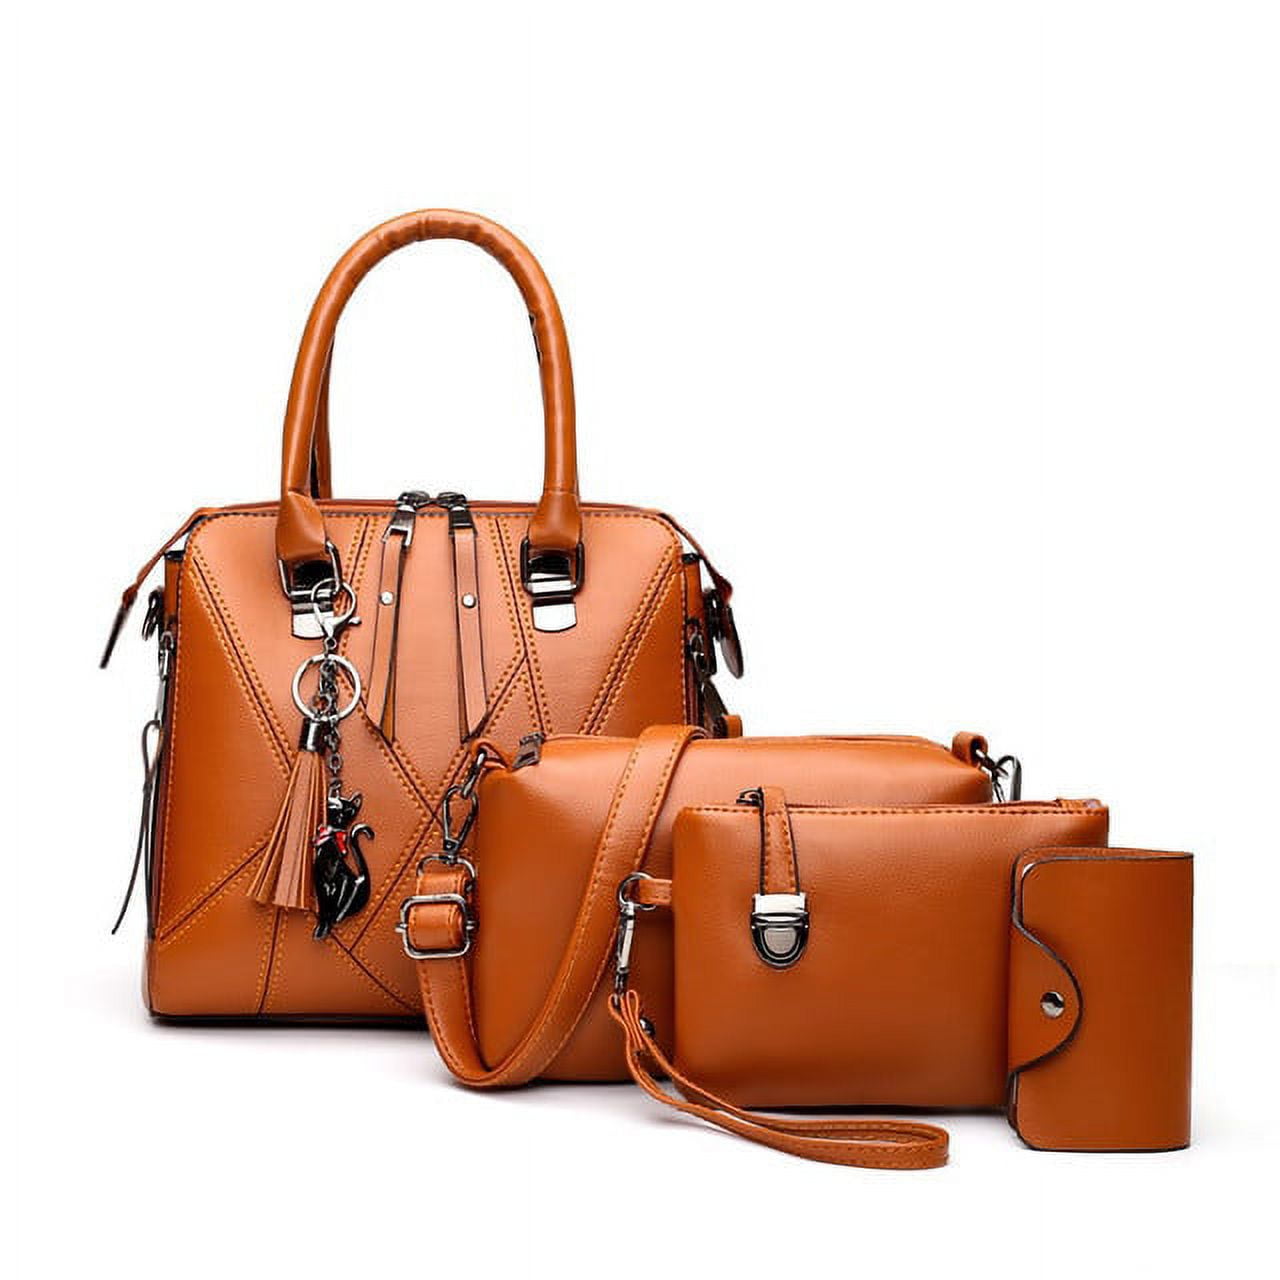 How to Start a Luxury Handbag Line